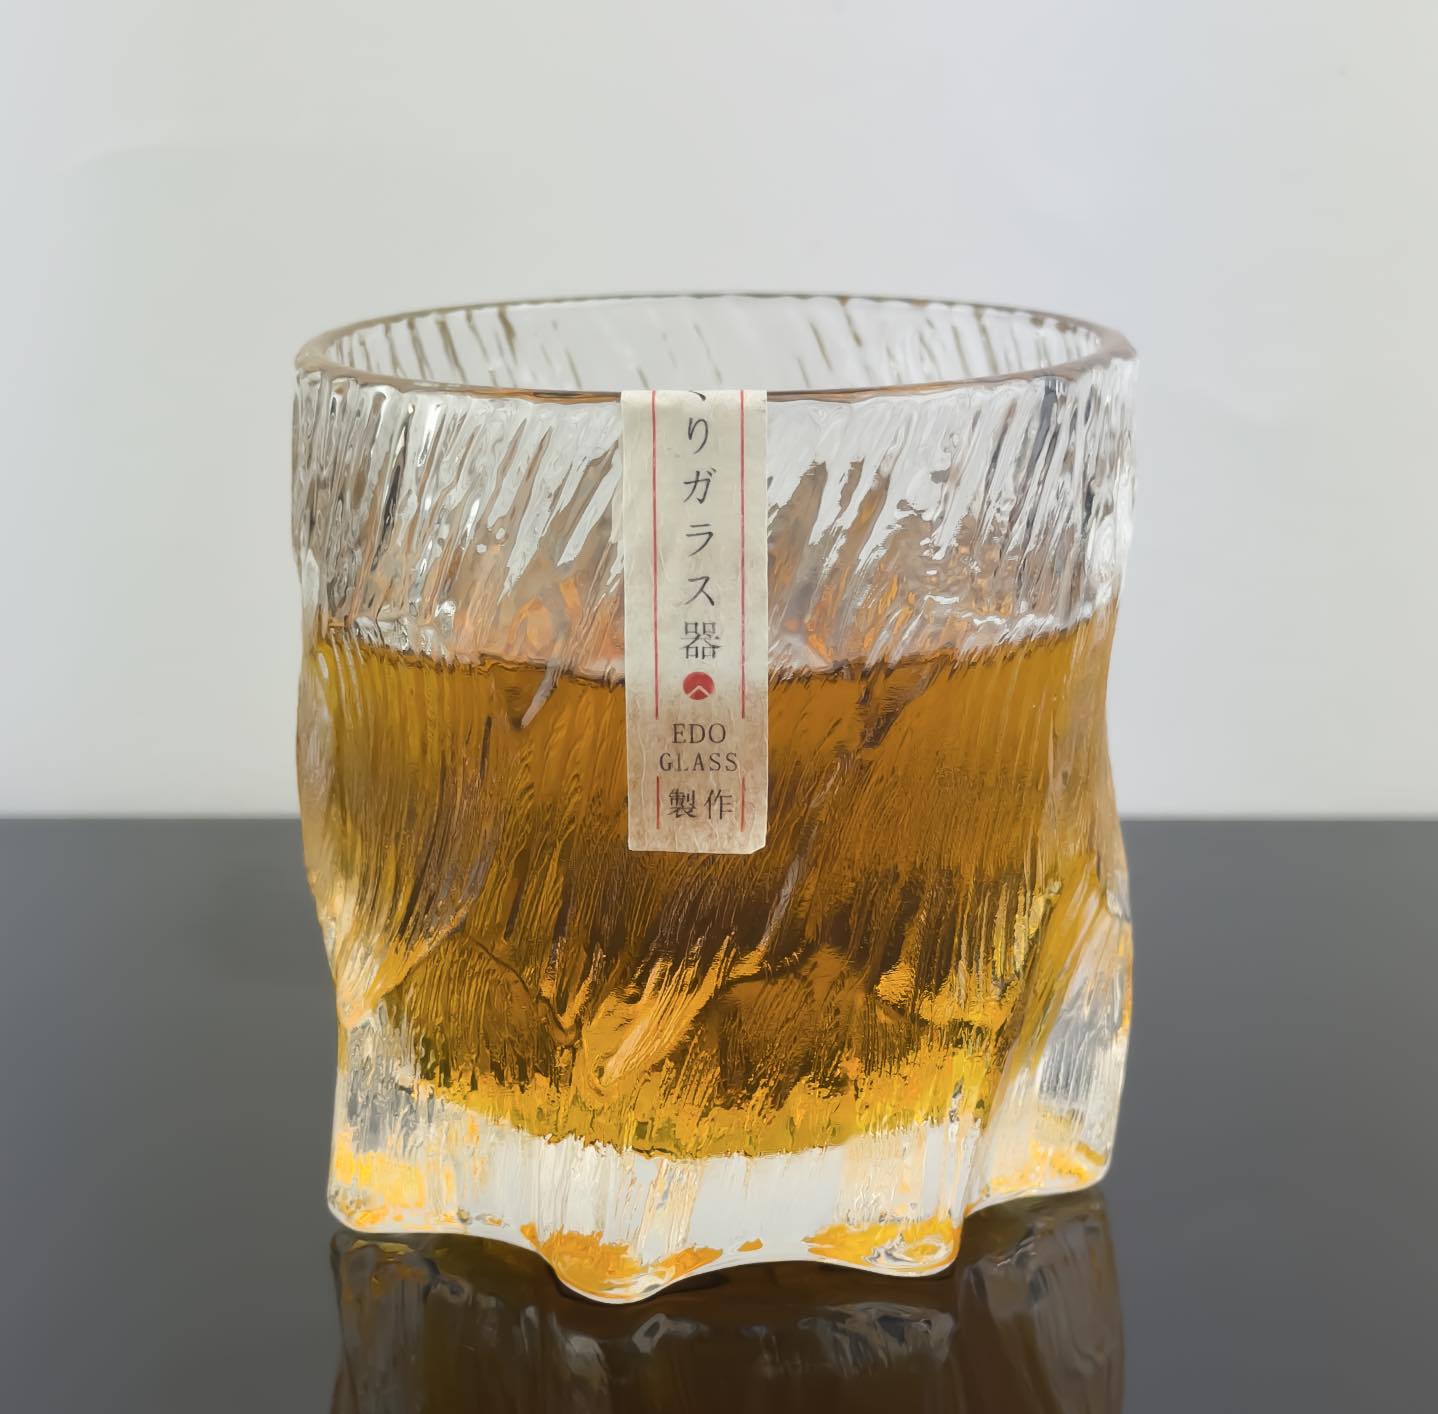 Dragon Claw Japanese Whisky Glass - Solkatt Designs 